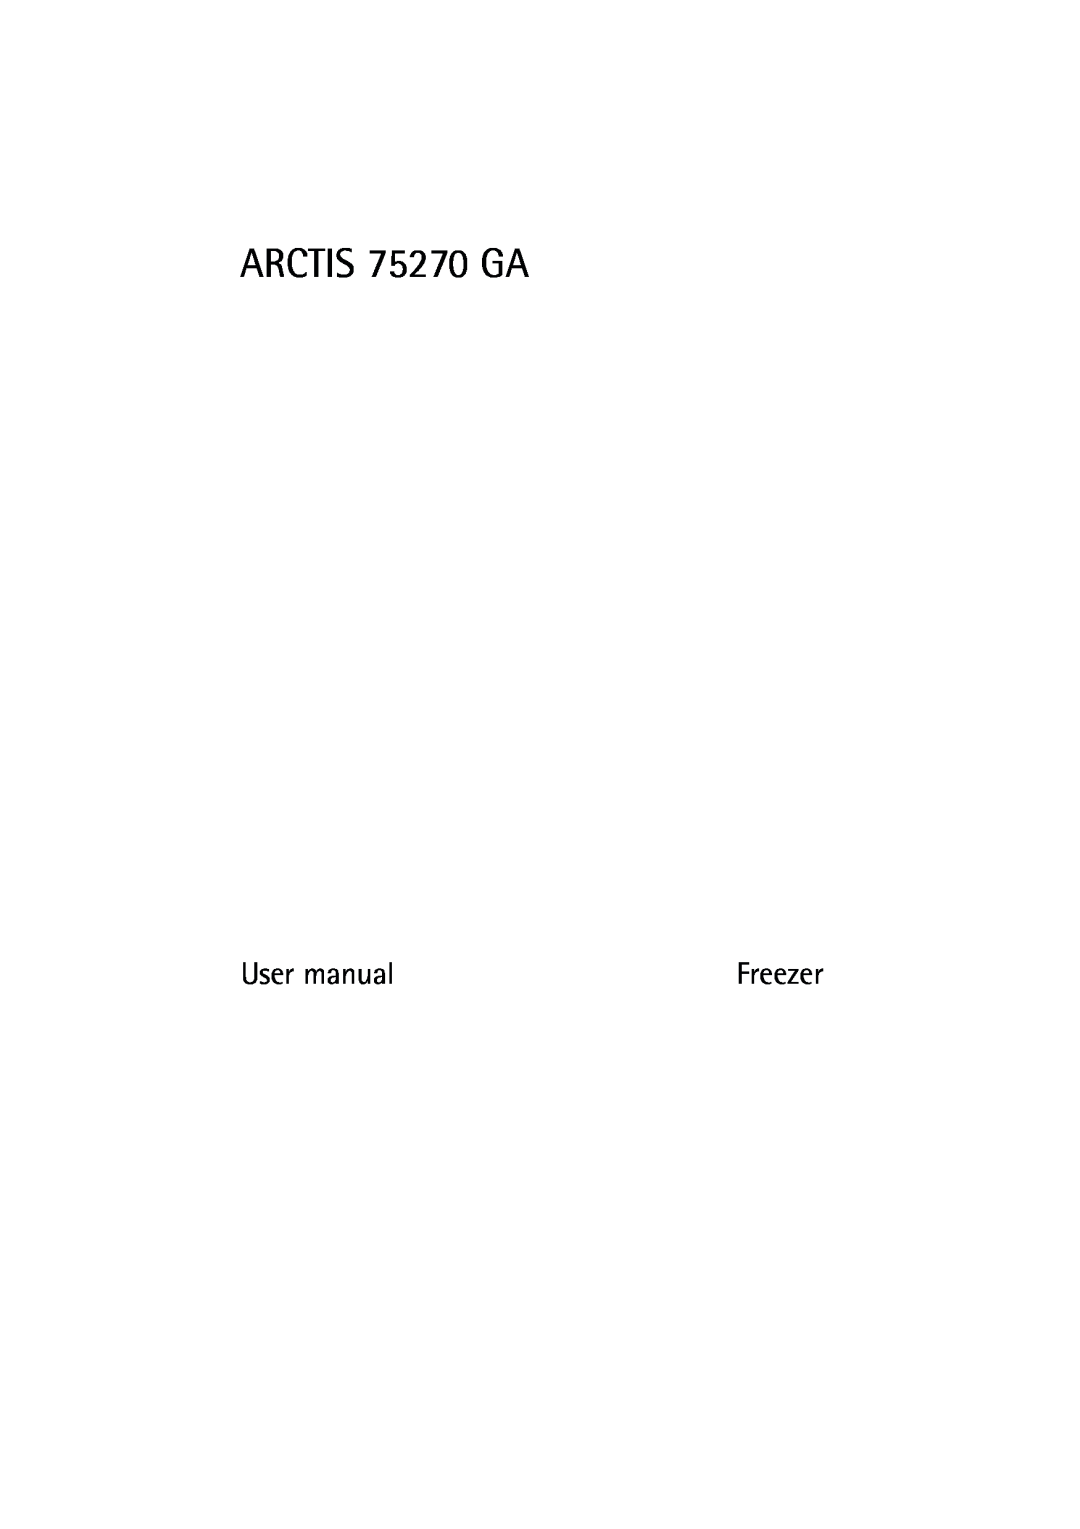 Electrolux user manual ARCTIS 75270 GA, User manual 